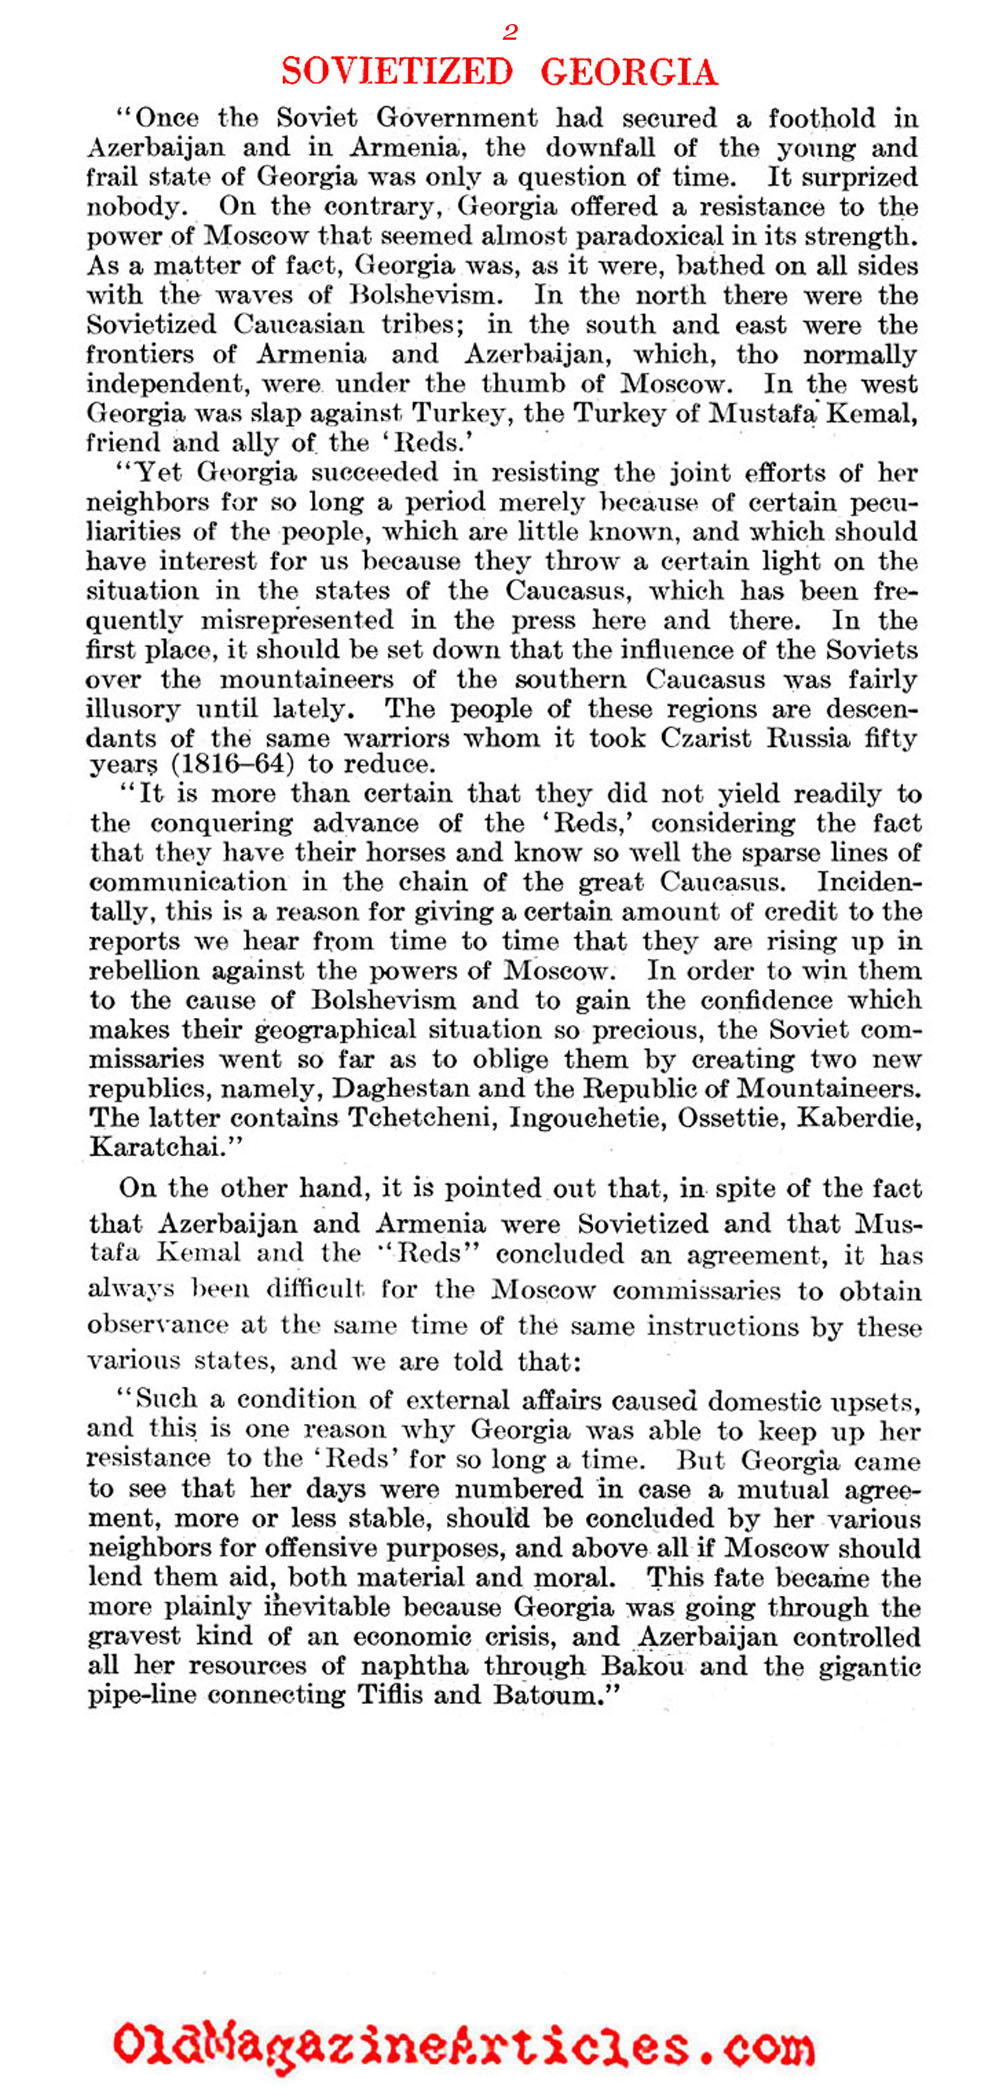 Georgia Invaded (Literary Digest, 1921)